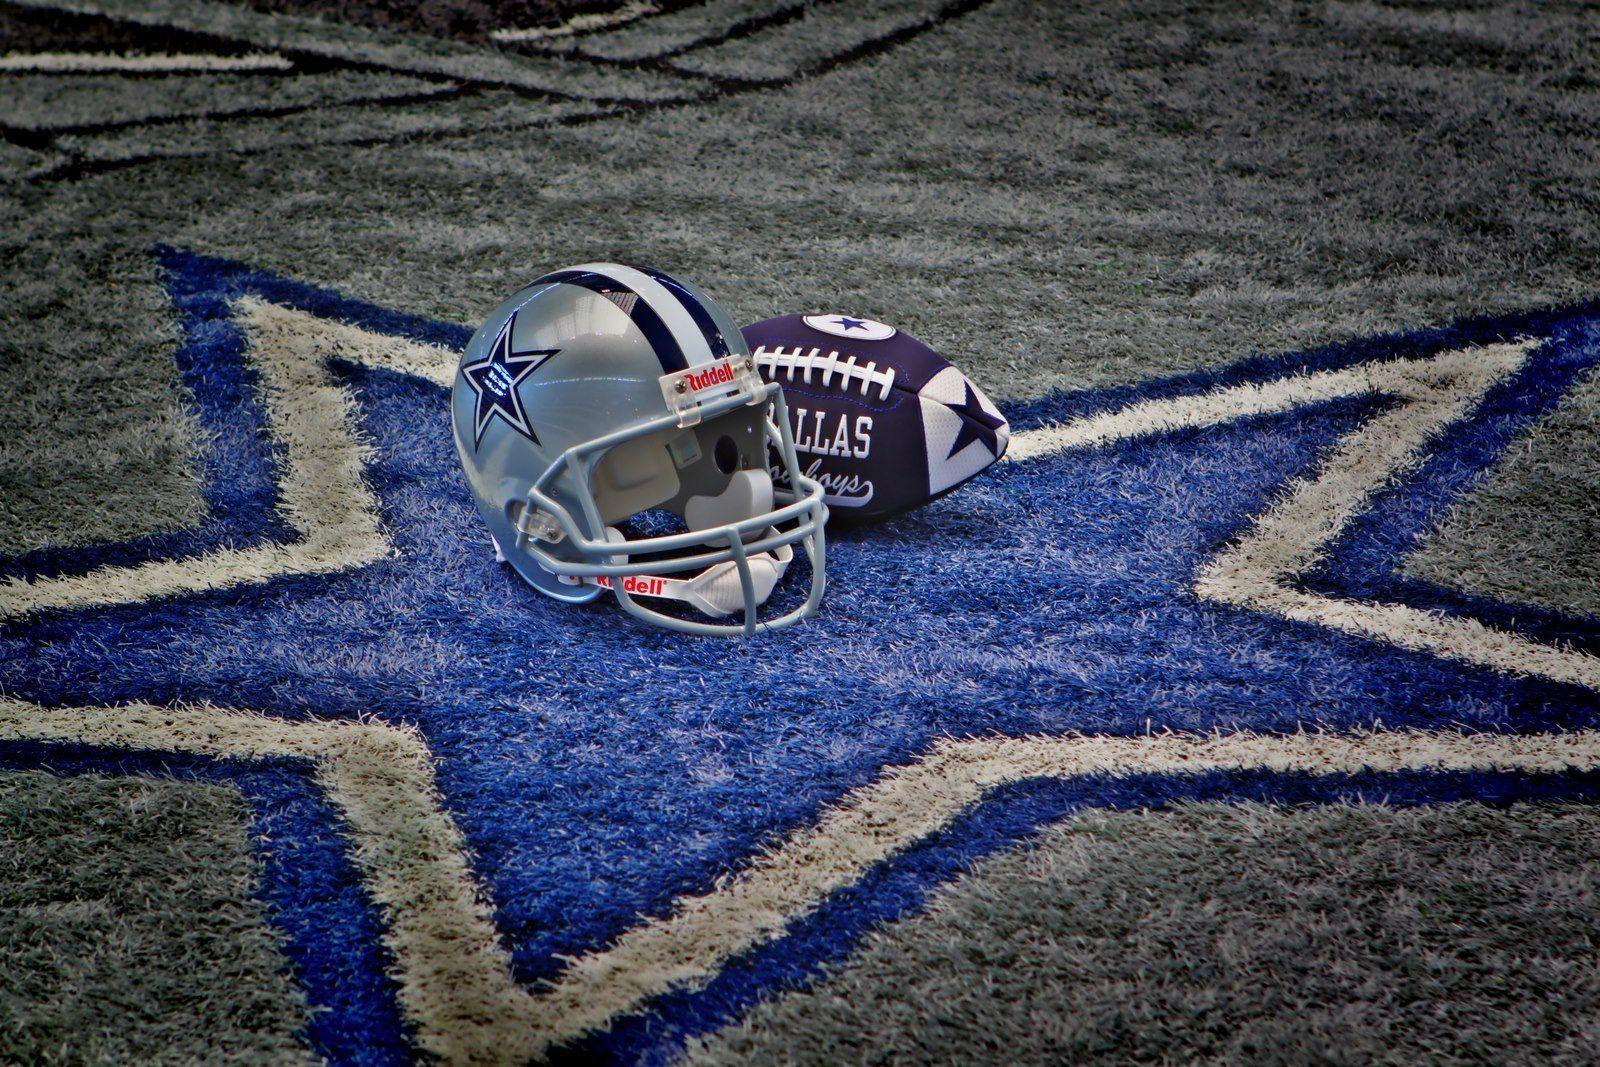 Dallas Cowboys HD wallpaper. Best Free JPG